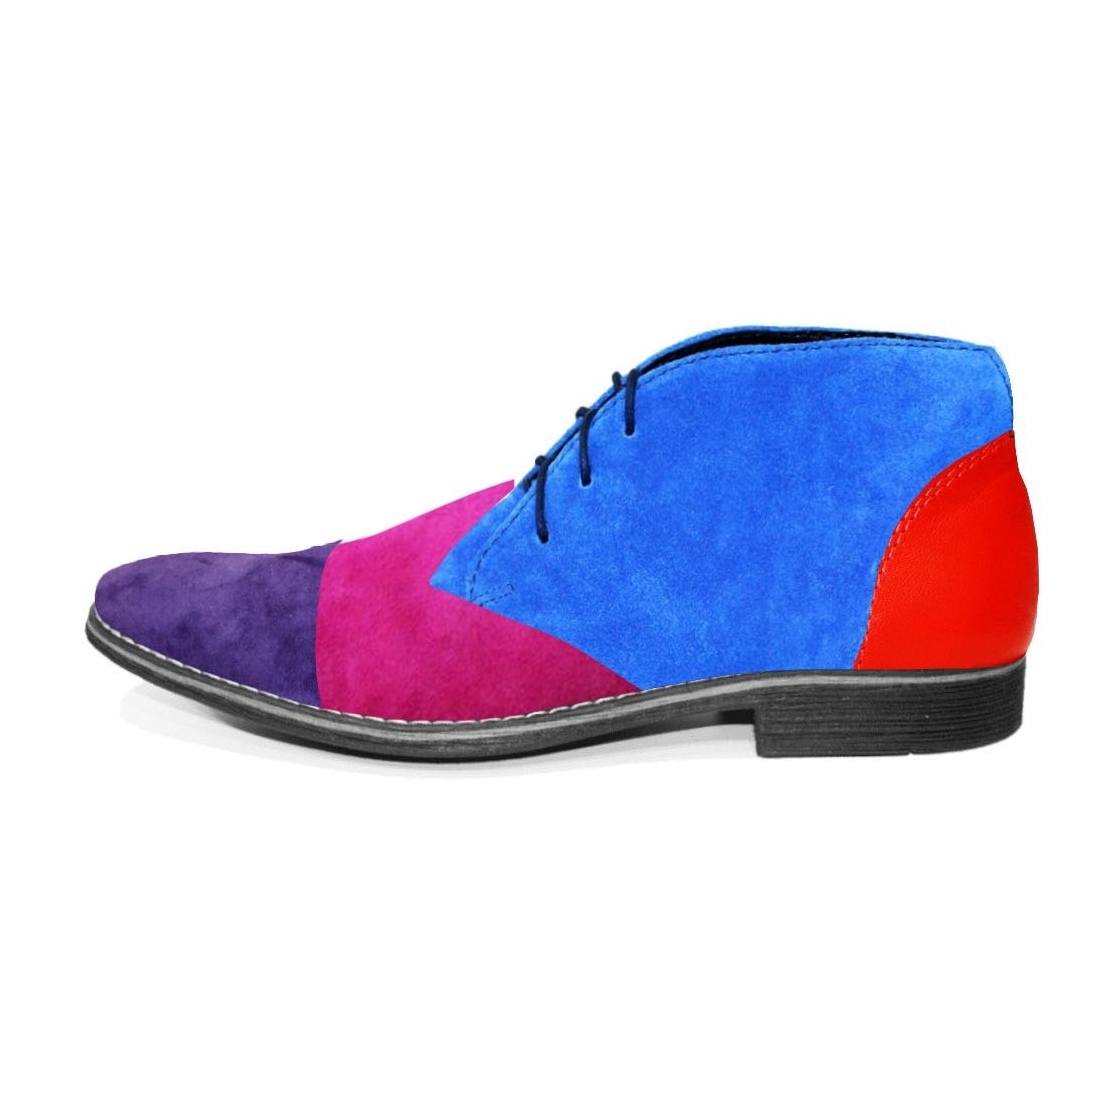 Modello Nocerro - чукка мужские - Handmade Colorful Italian Leather Shoes